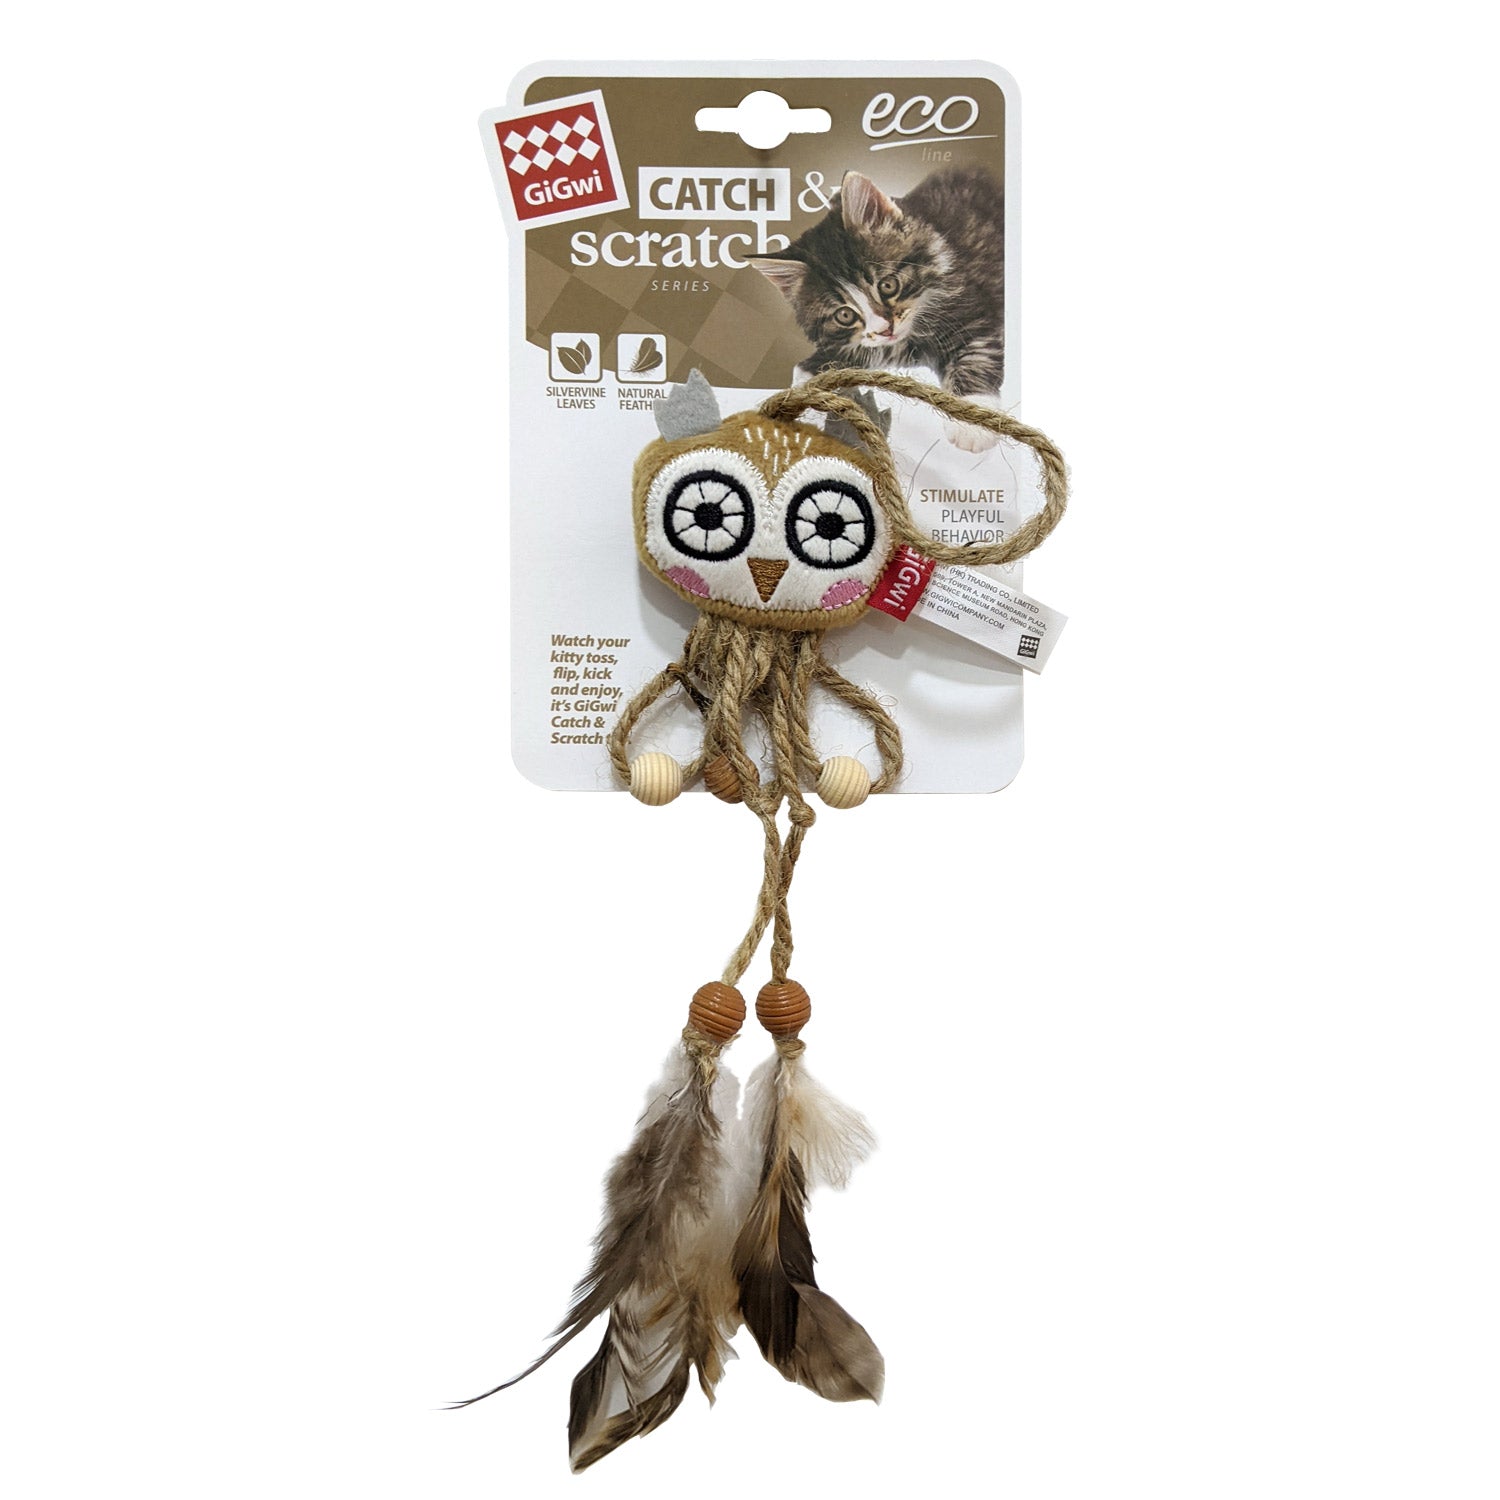 GIGWI Catch & Scratch Eco Line with Feathers (Owl)